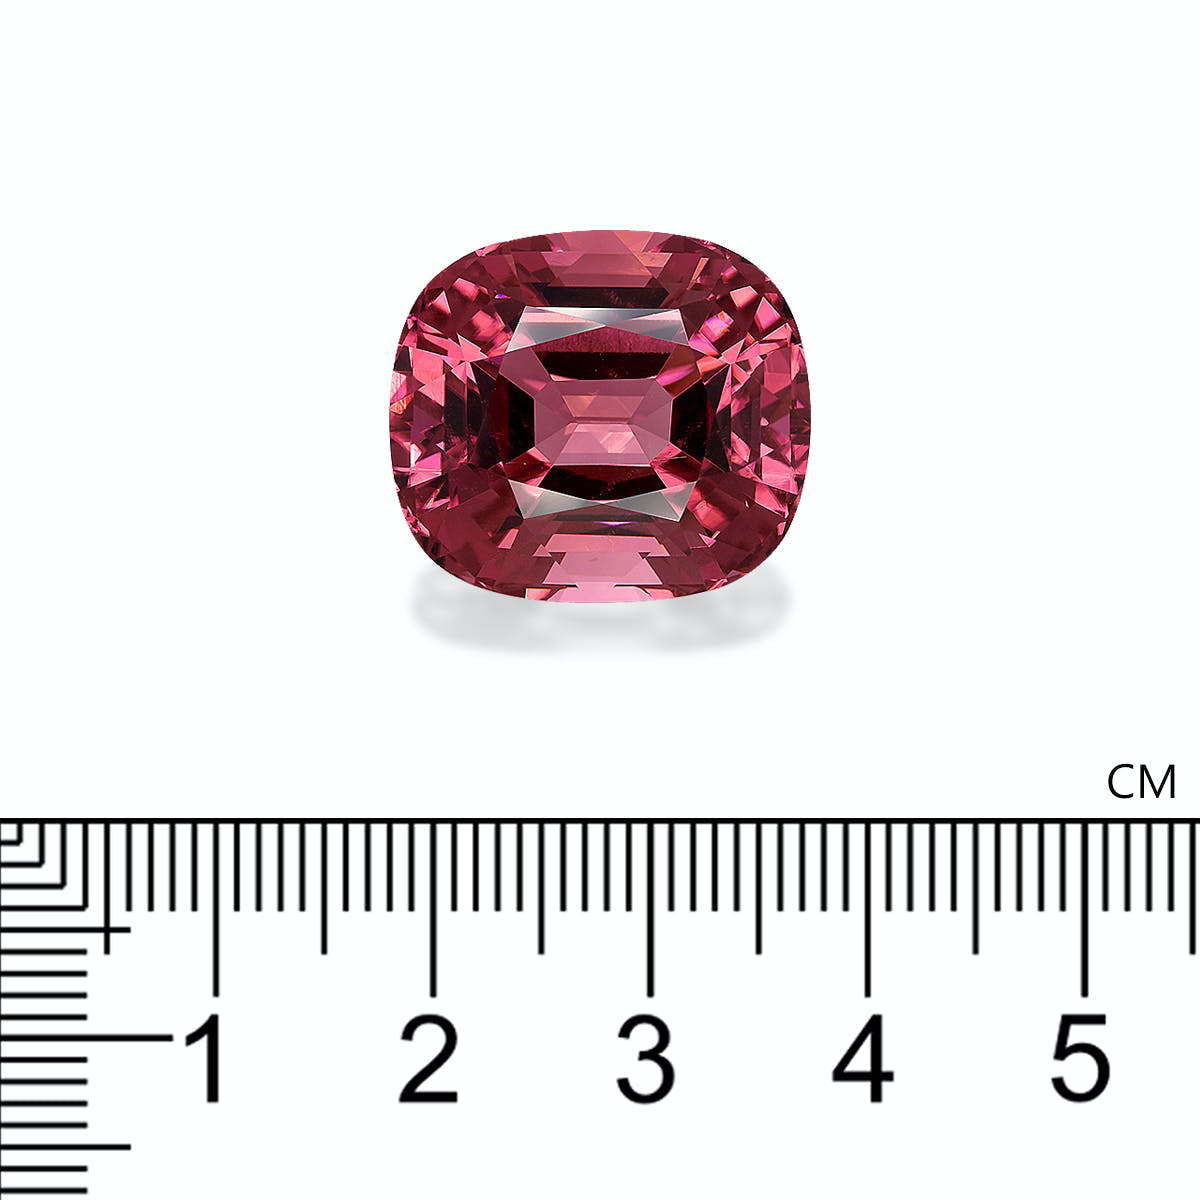 Fuscia Pink Tourmaline 30.13ct - 19x17mm (PT0481)